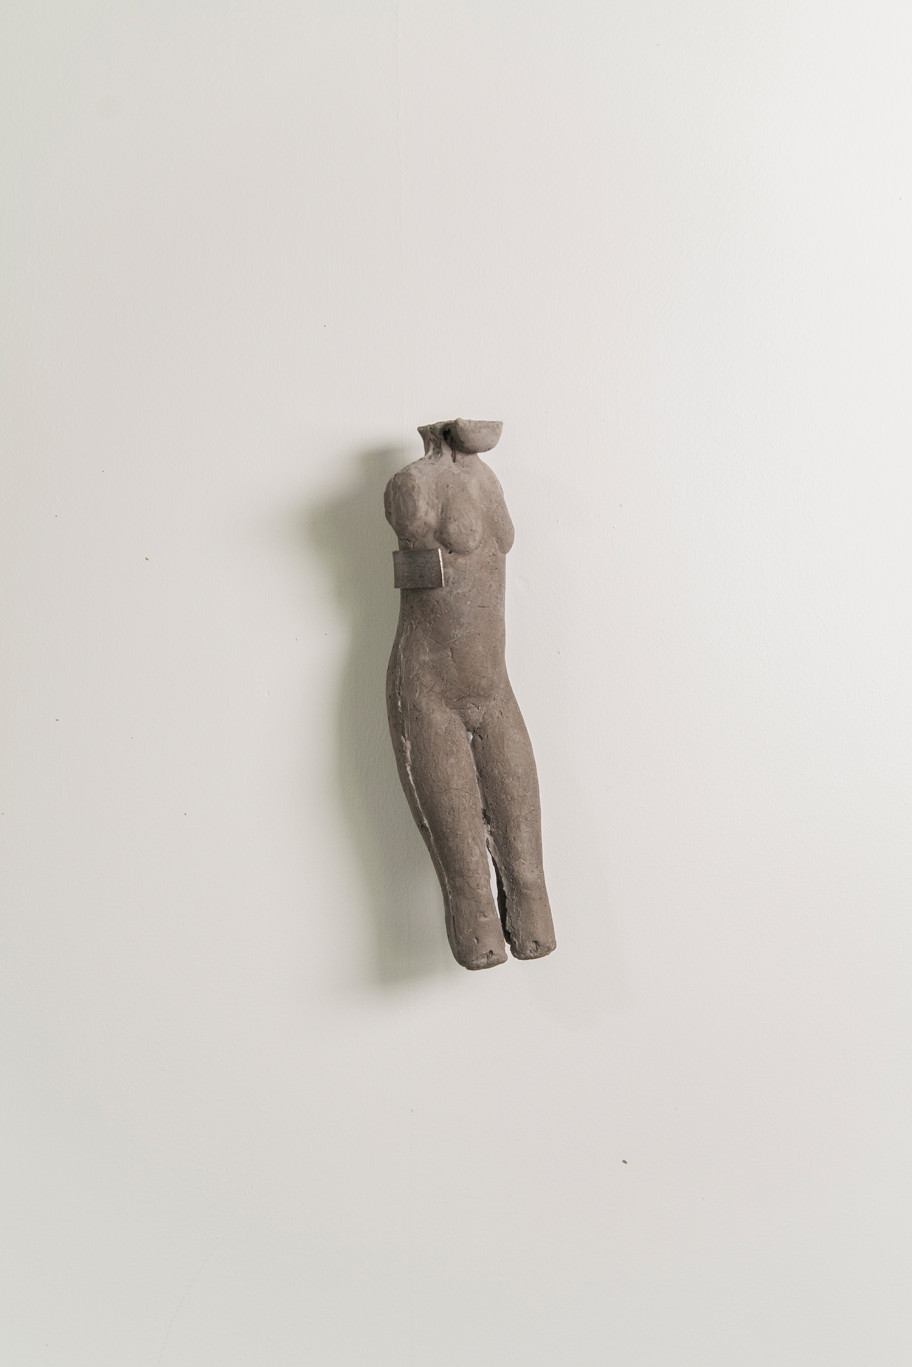  Yu  Ji Tiny Figure 2101, 2021cement, iron 27 x 9 x 7 cm 